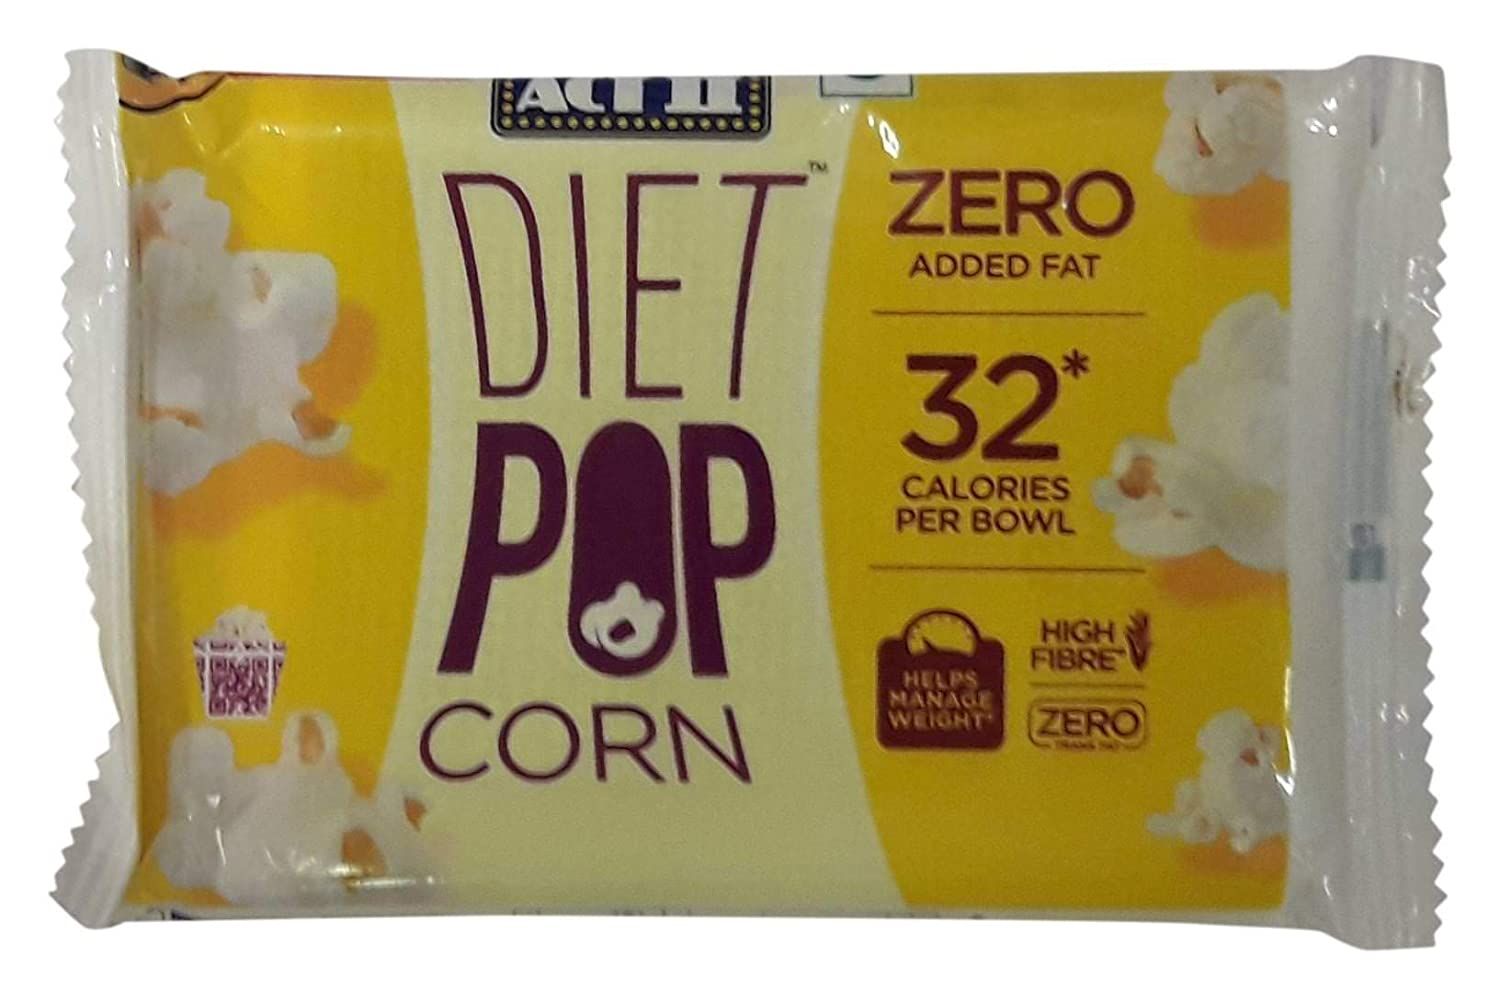 ACT II Microwave Diet Popcorn Zero Added Fat Image